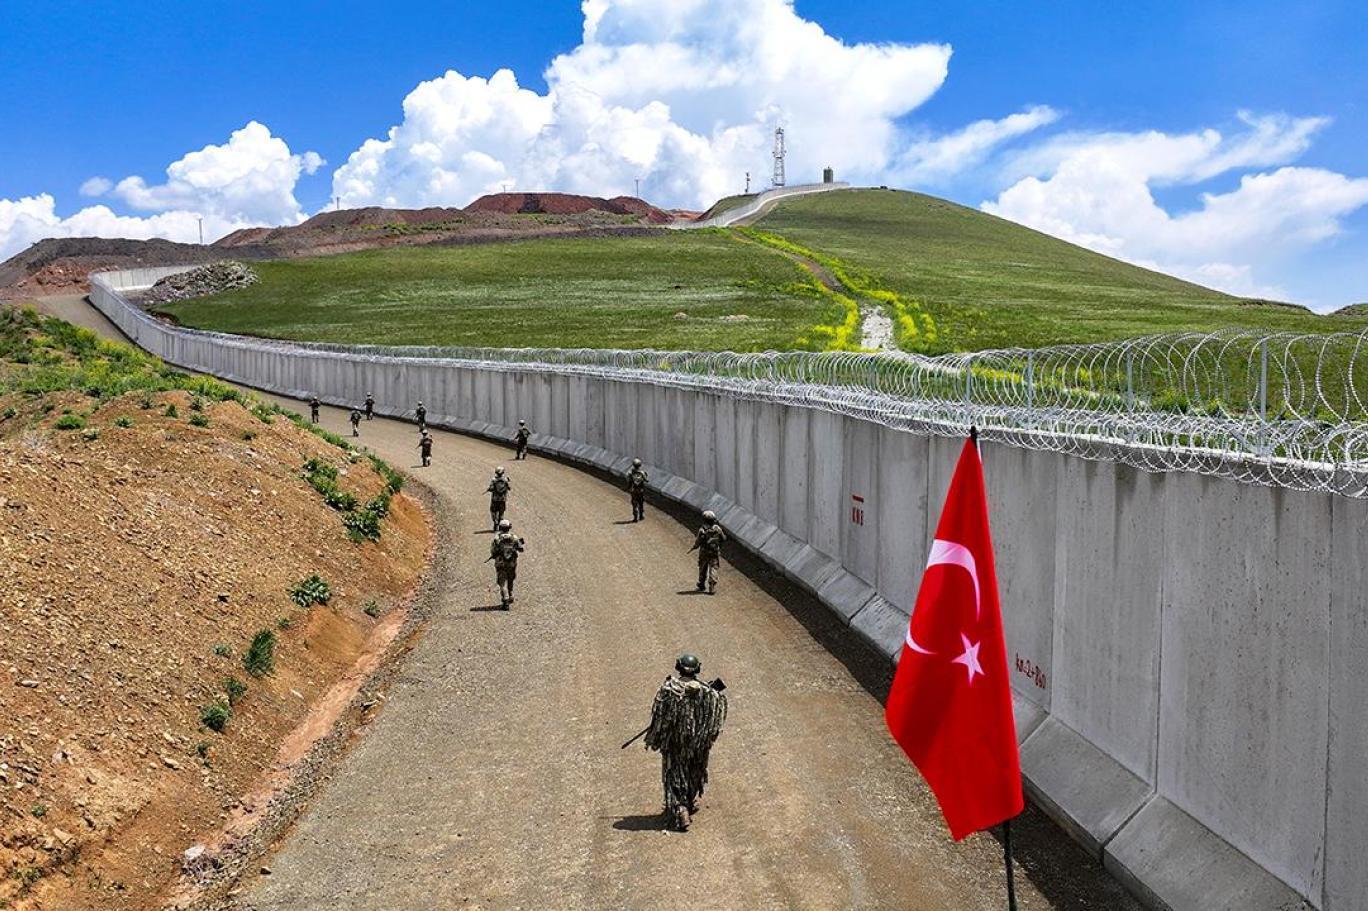 Türkiye completes 170-km Iran border wall